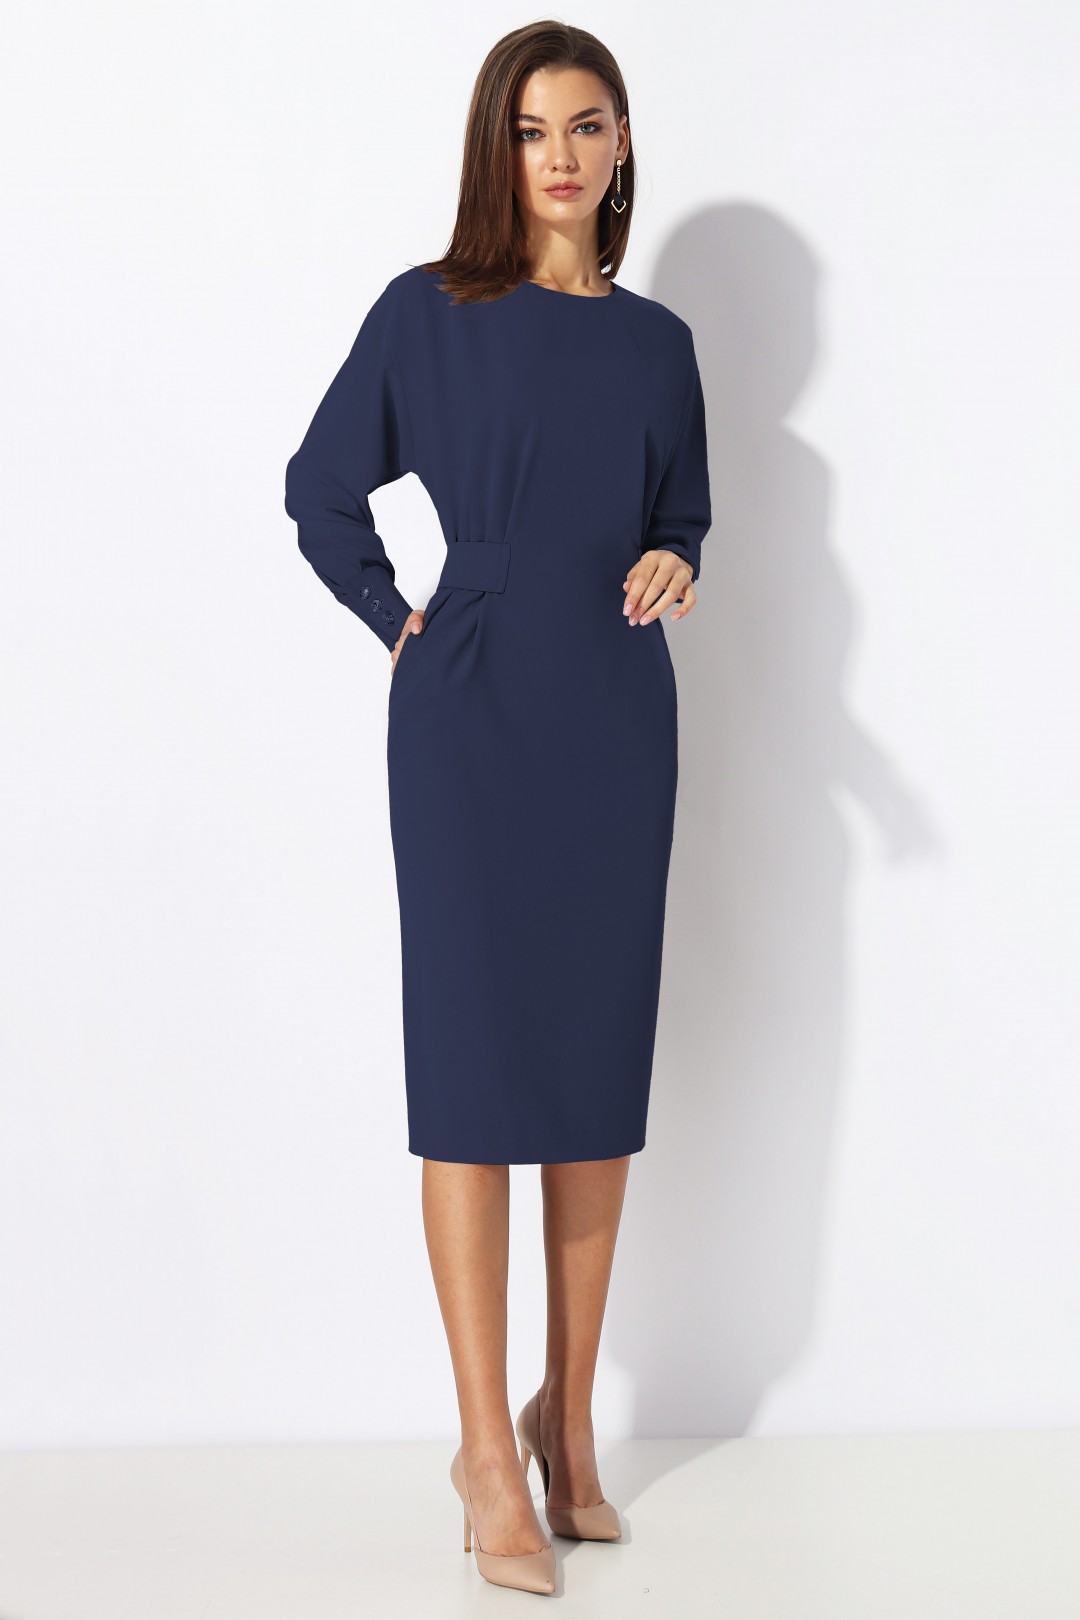 Платье МиА-Мода 1197-1 темно-синий